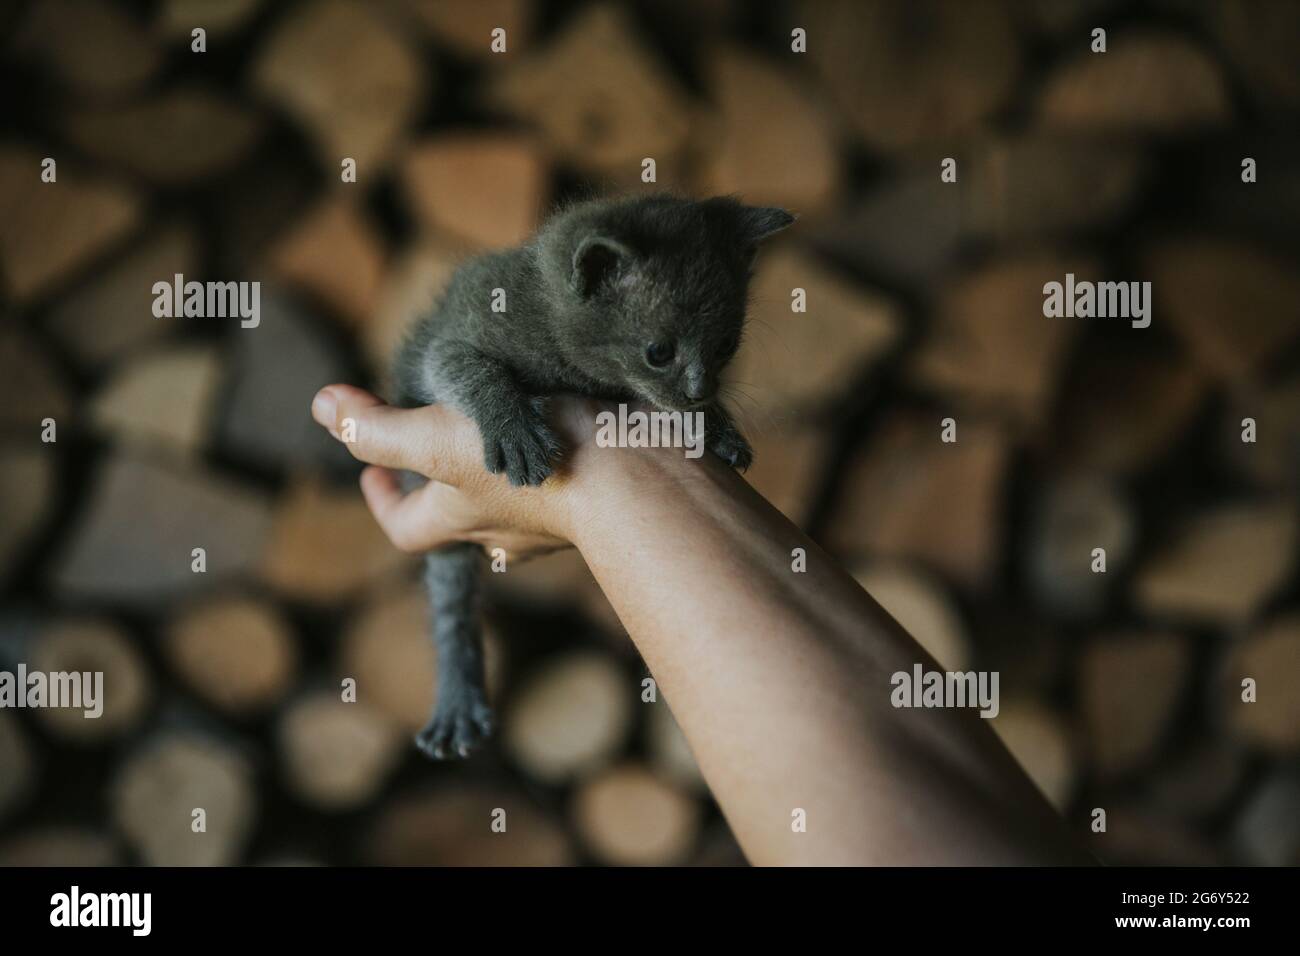 Closeup of a person holding an adorable fluffy small gray kitten Stock Photo